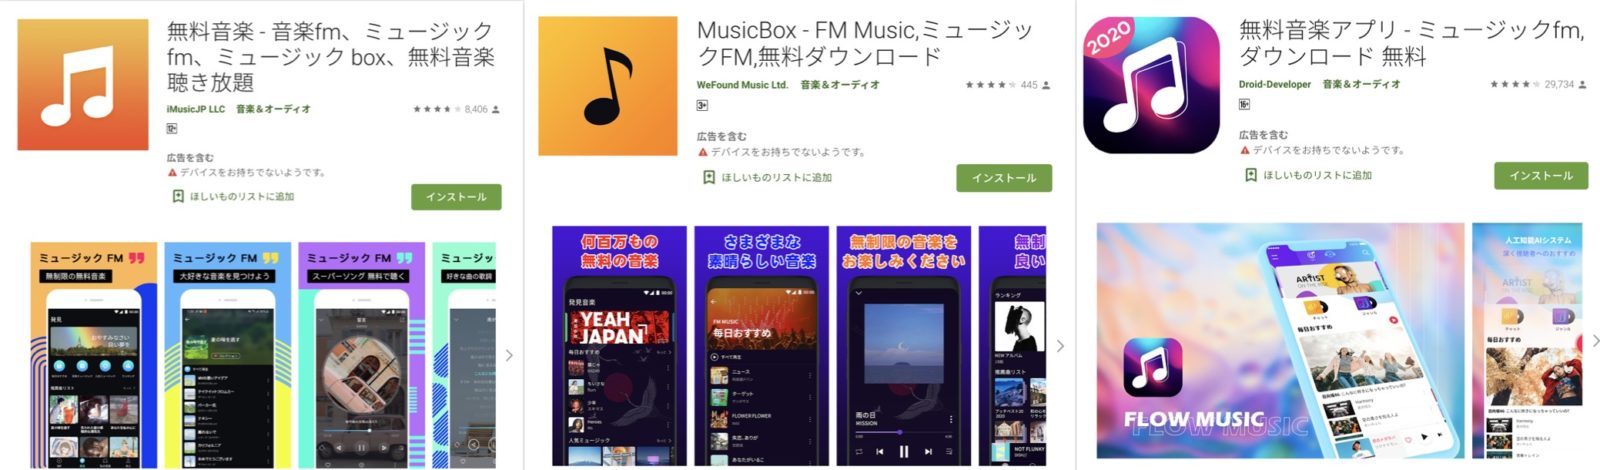 Music fm 公式 サイト